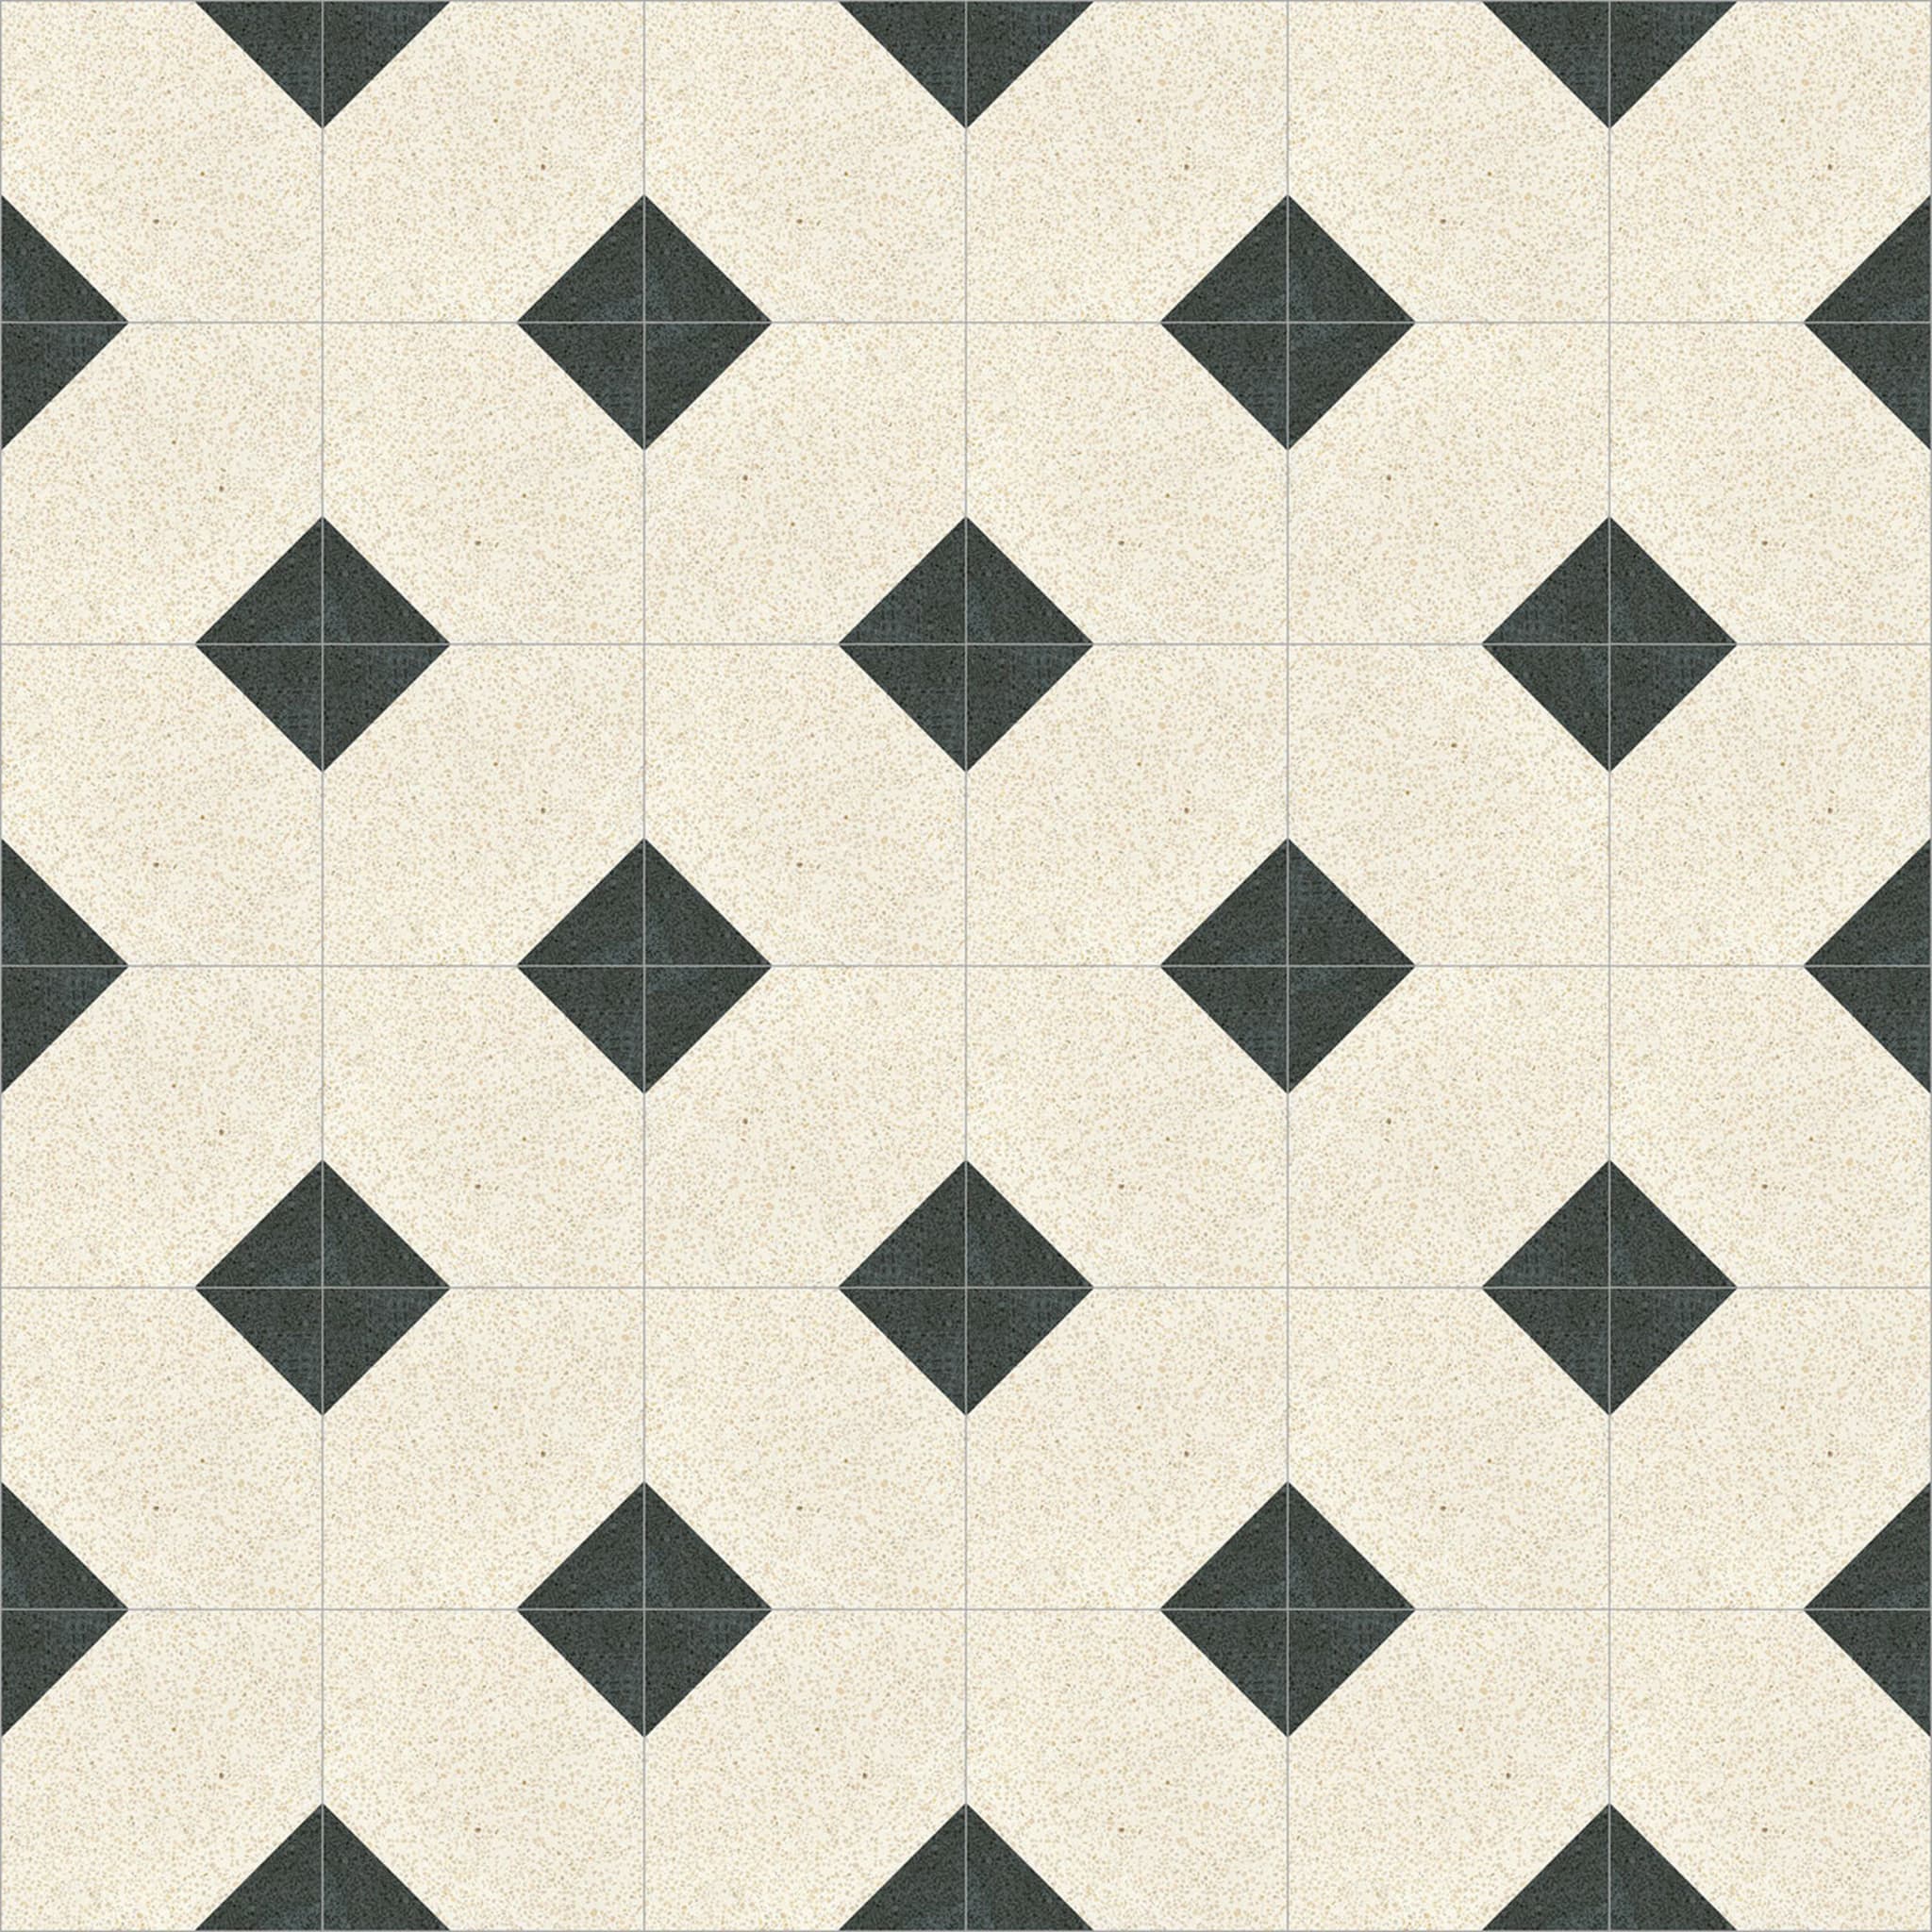 2 Angoli Set of 25 Terrazzo Tiles - Alternative view 1